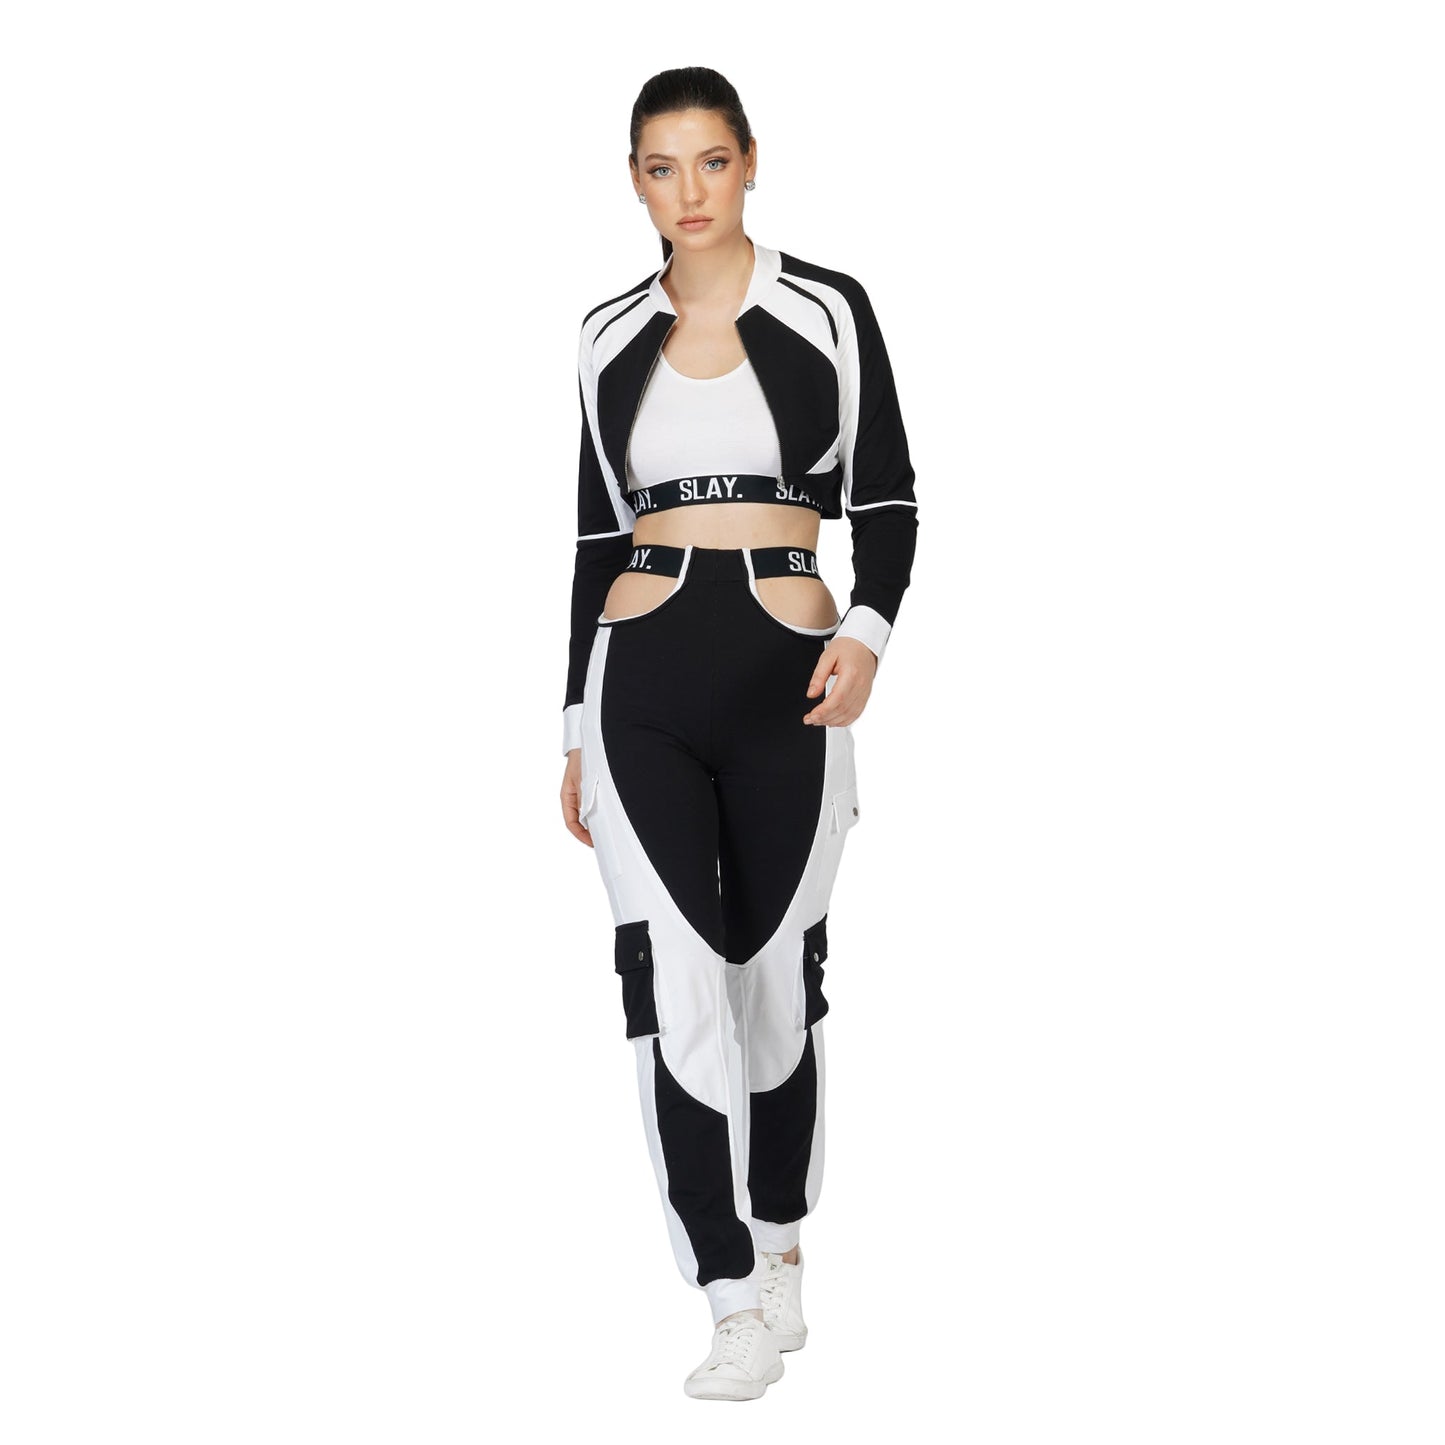 SLAY. Women's Activewear Crop Jacket Black & White Colorblock Streetwear